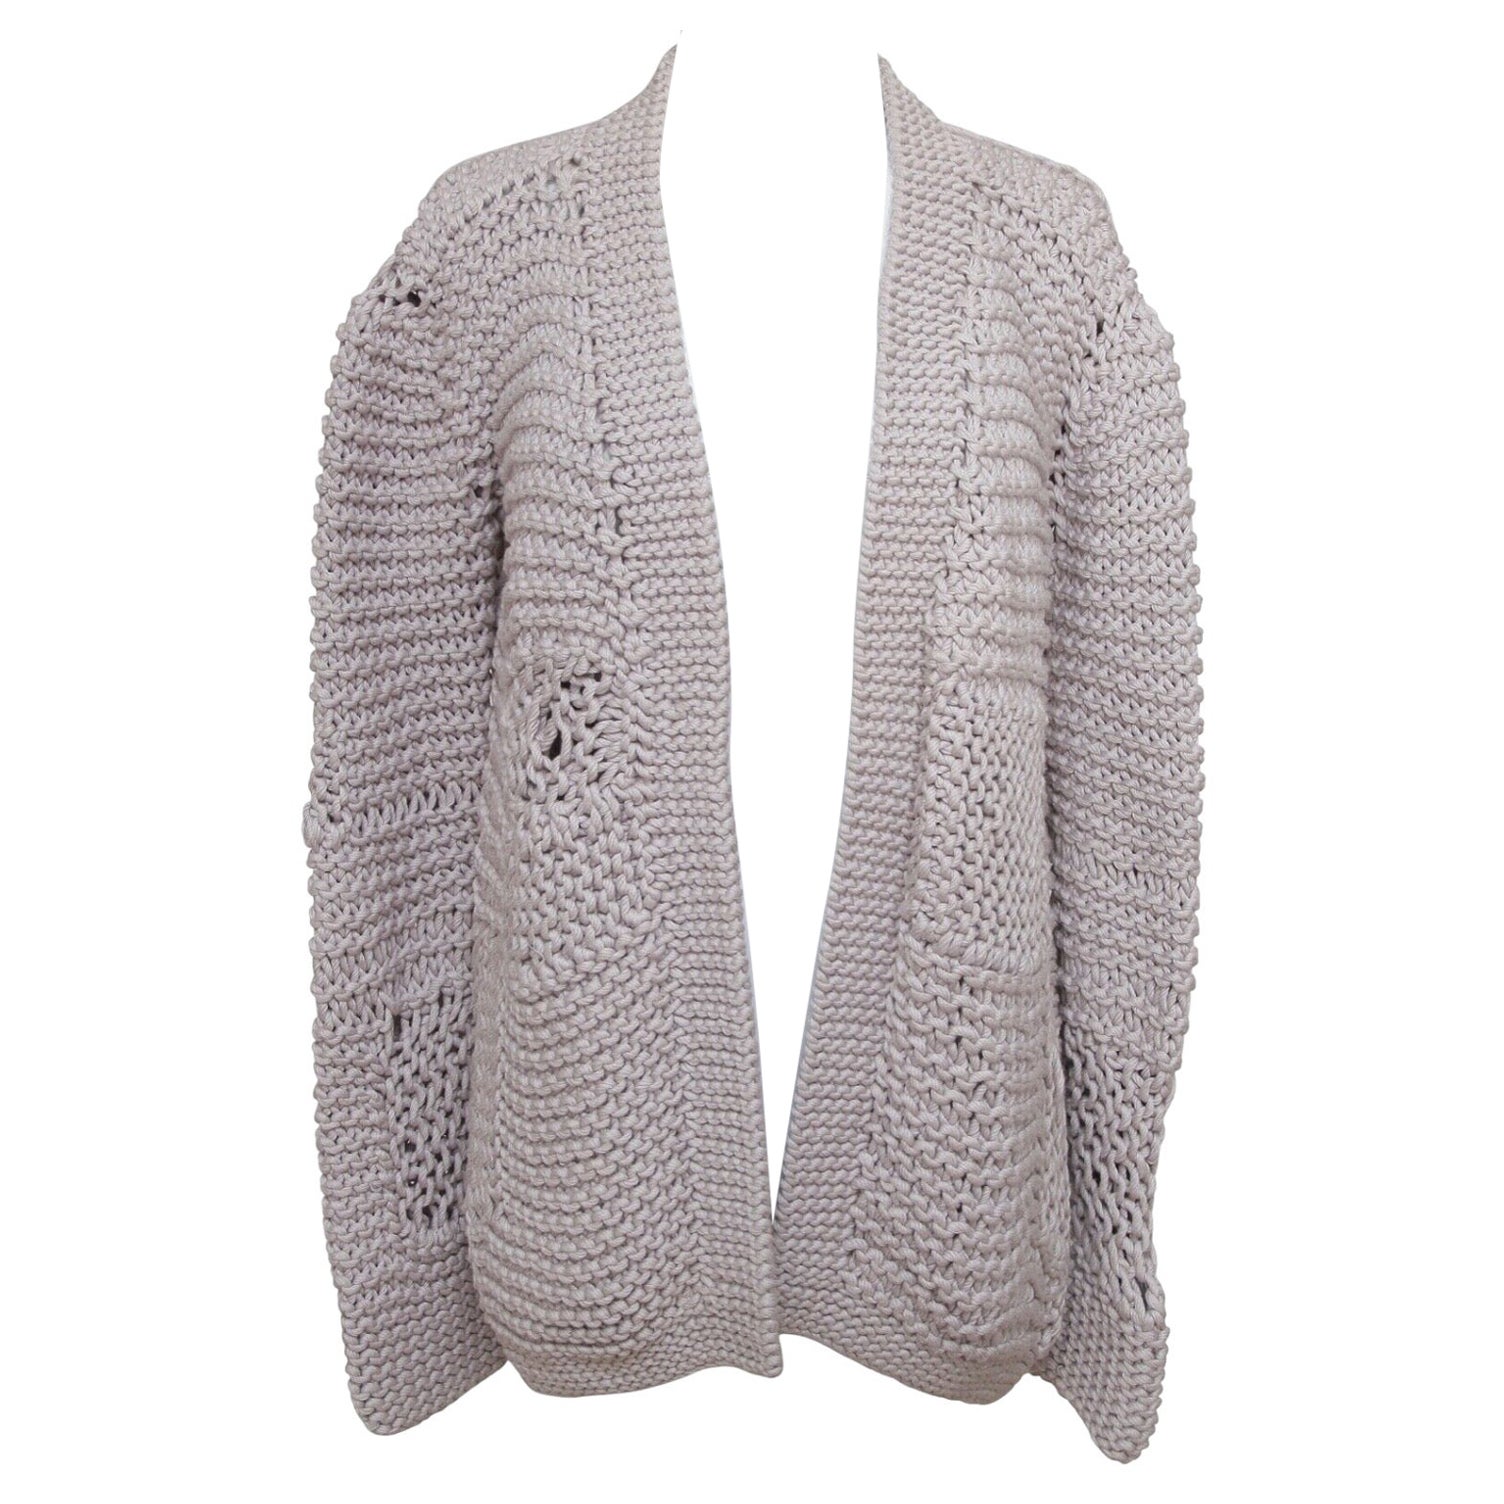 CHLOE Cardigan Sweater Knit Grey Lavender Open Front Long Sleeve Sz S 2008 For Sale